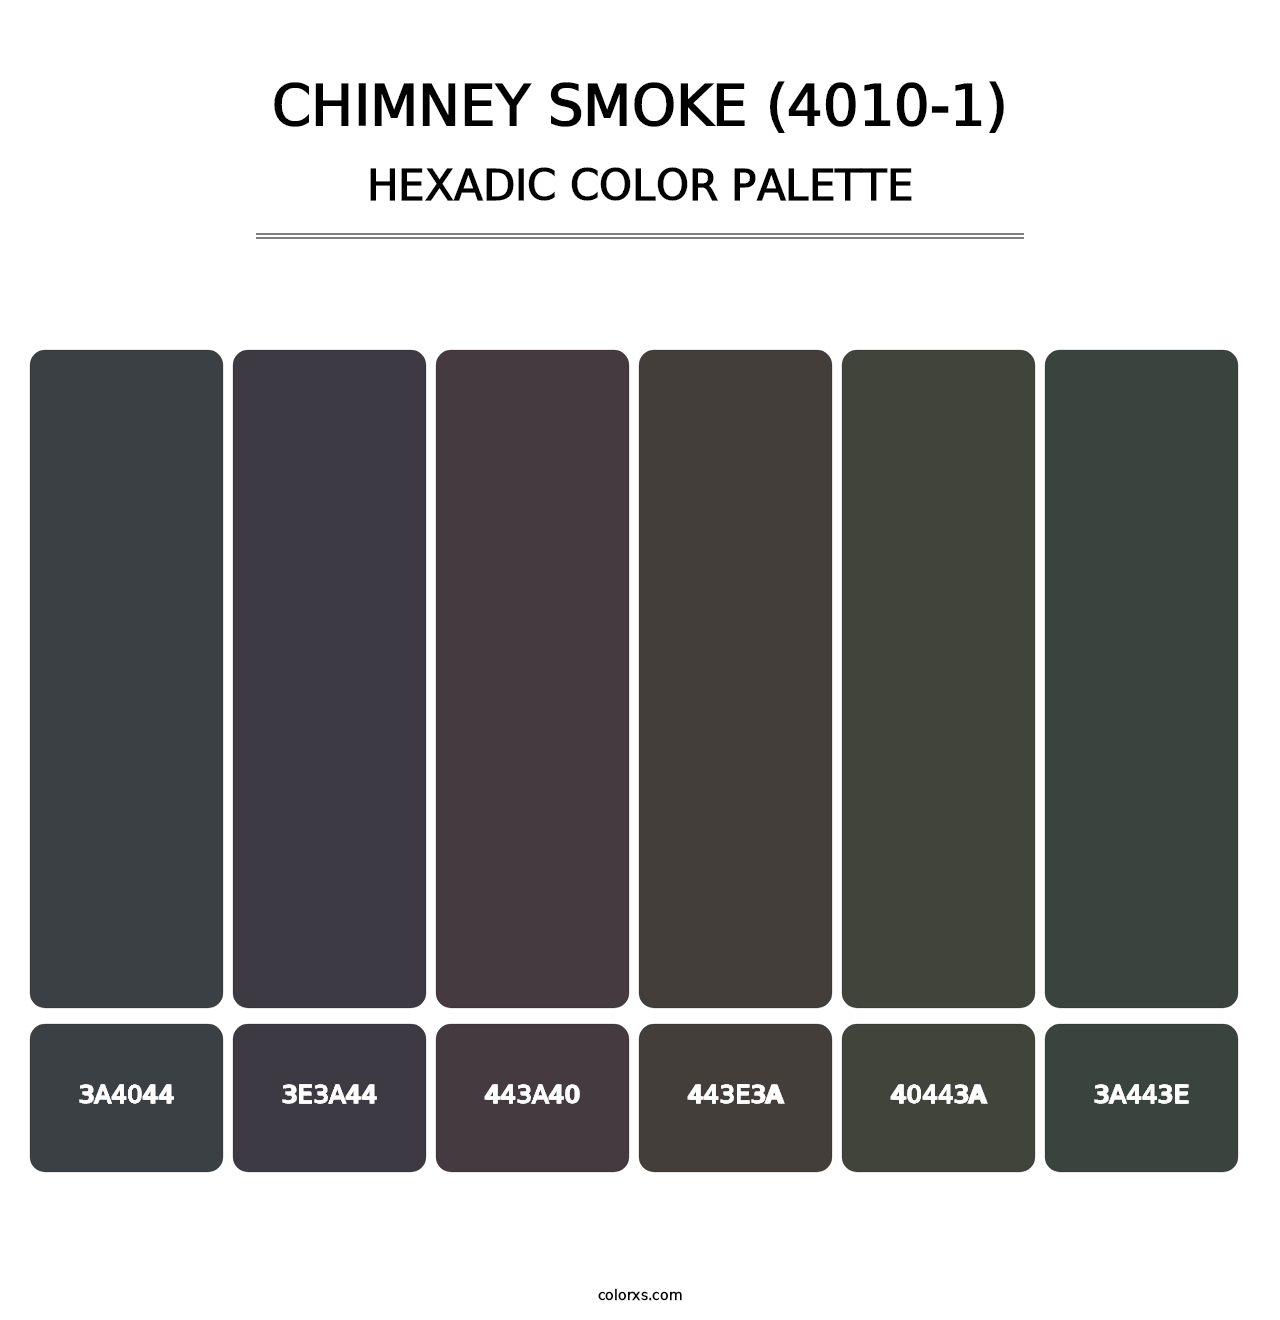 Chimney Smoke (4010-1) - Hexadic Color Palette